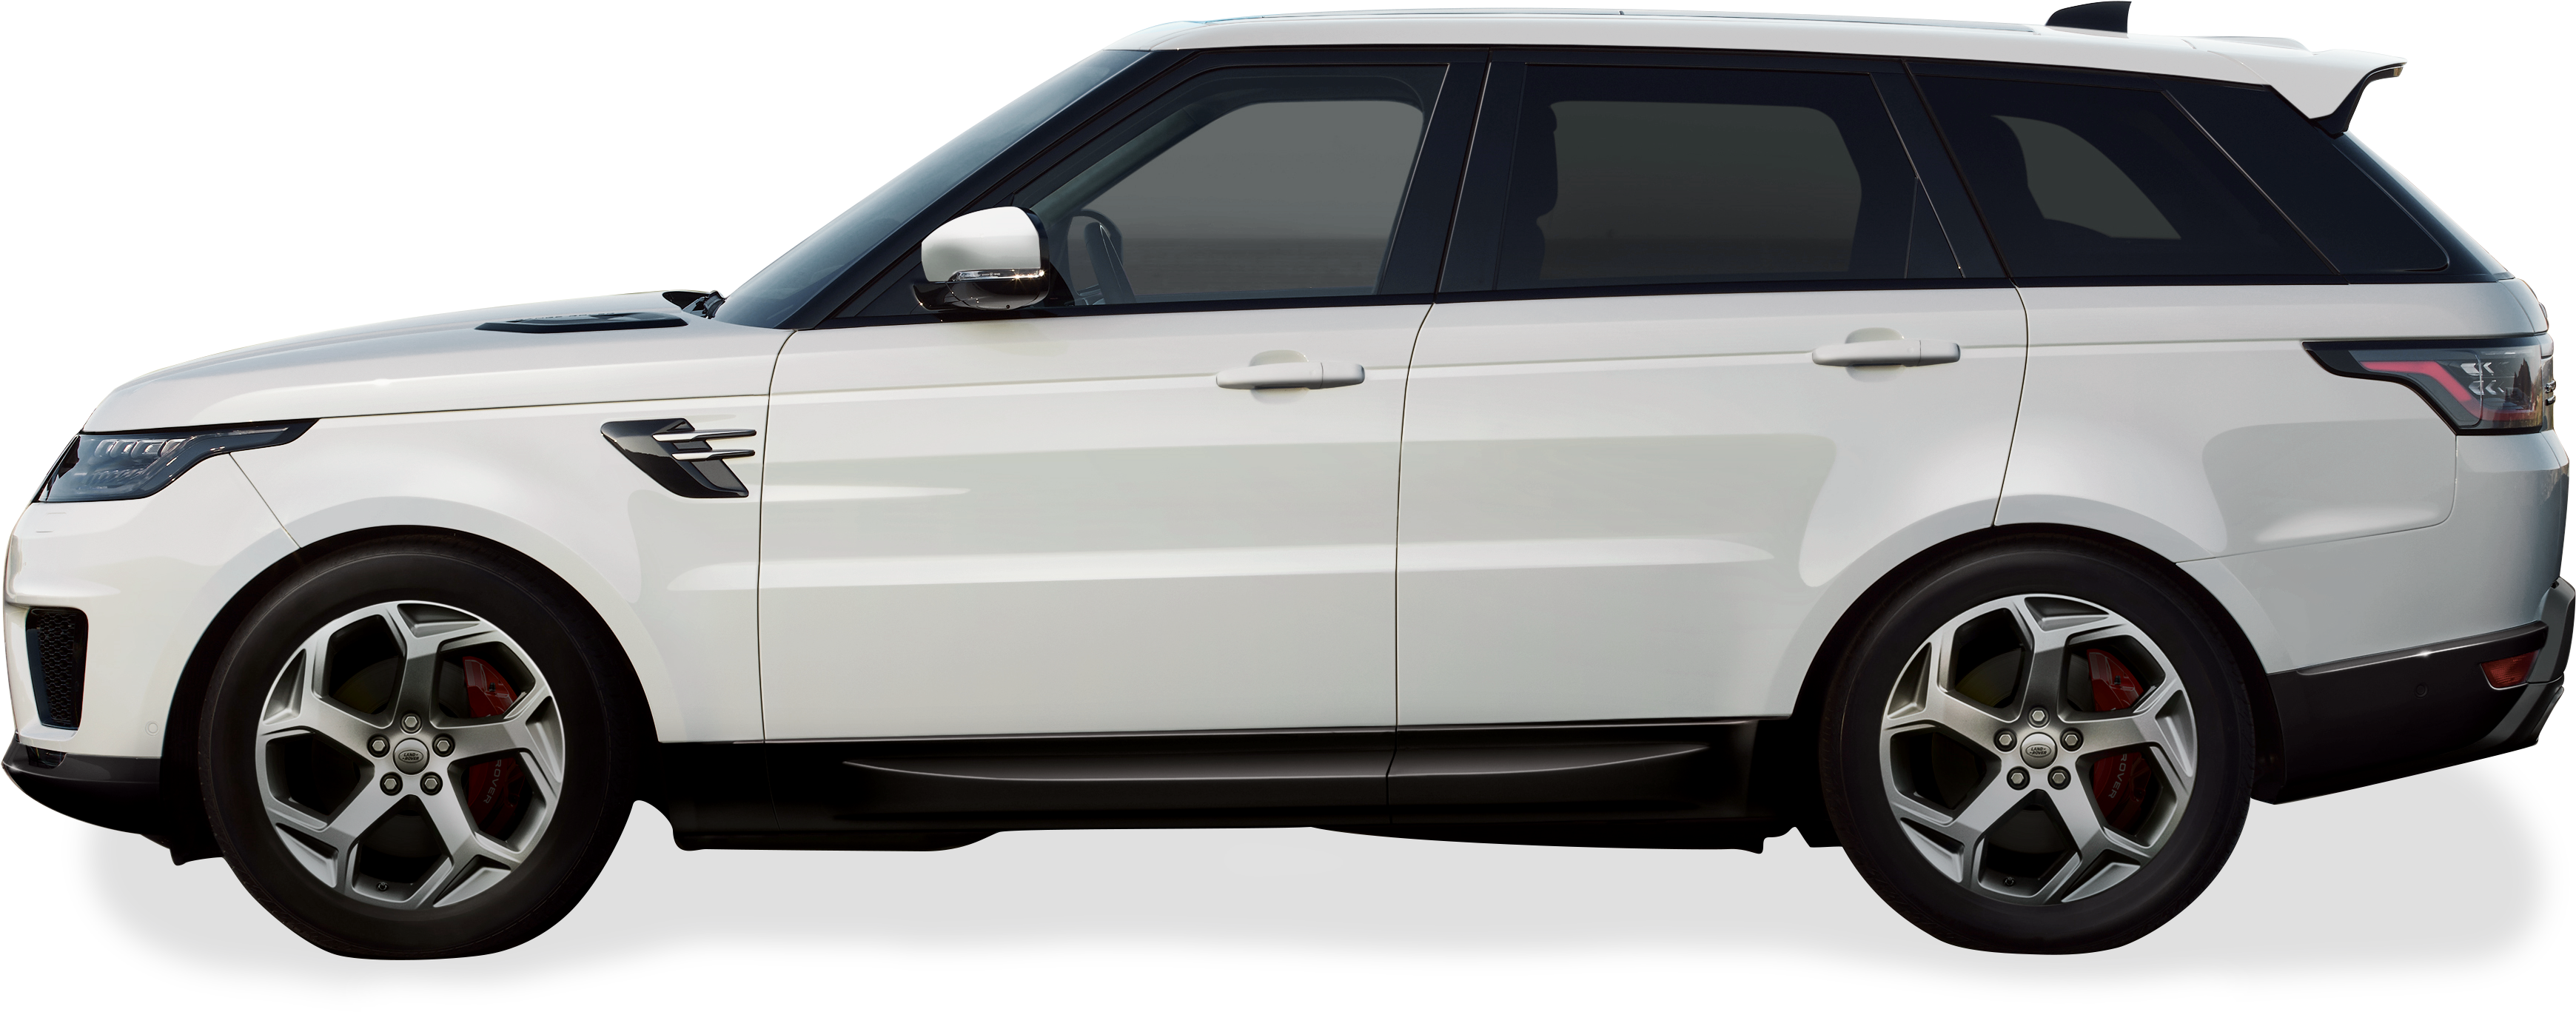 Range Rover Car PNG Image